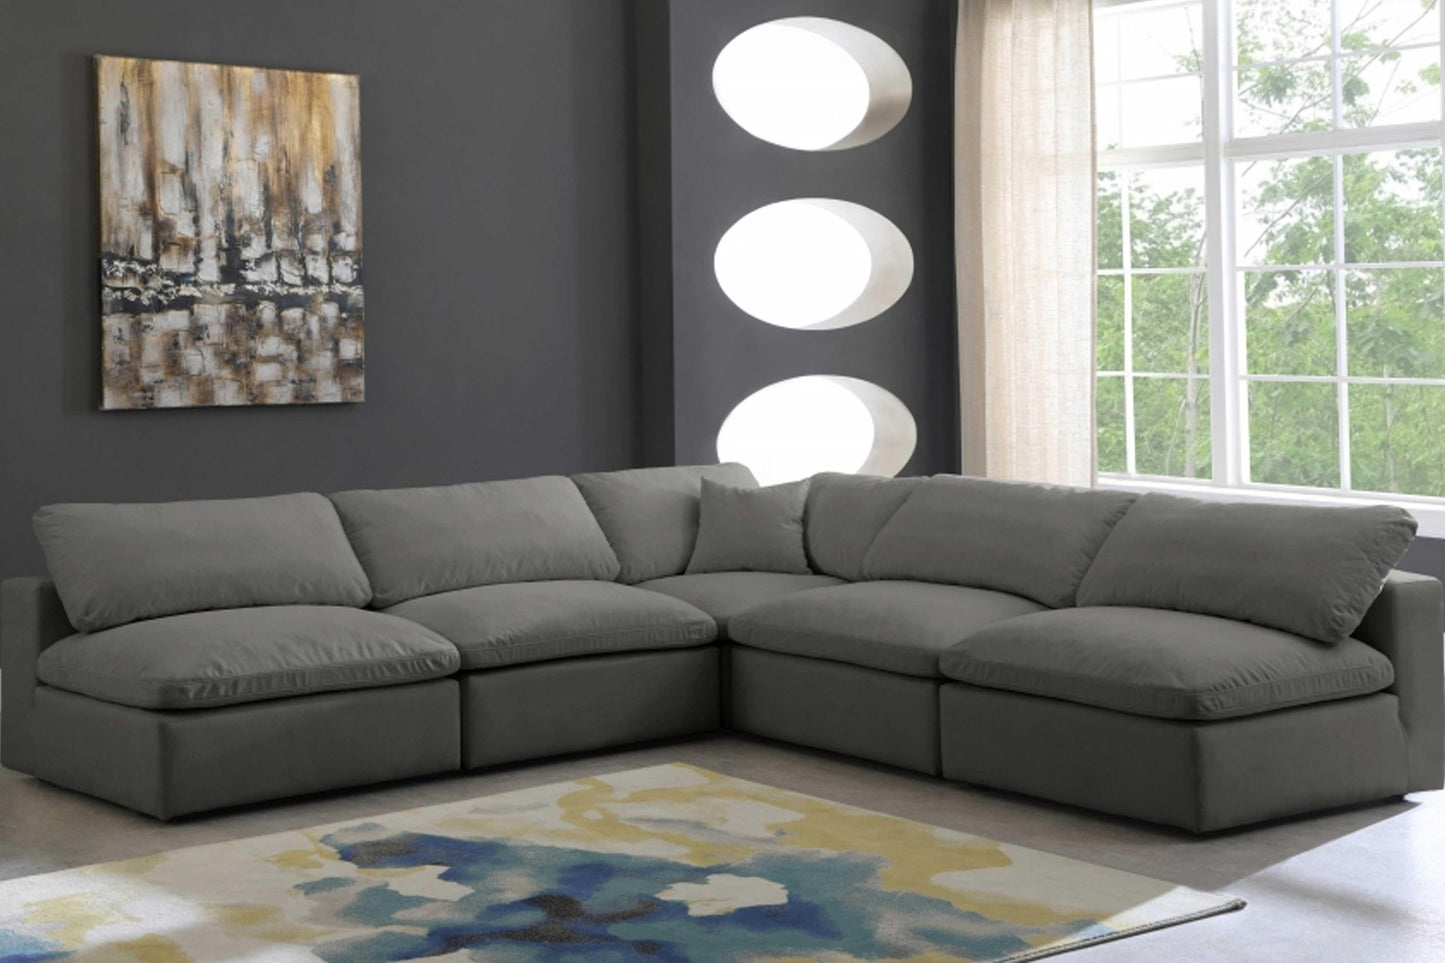 Serene Linen Deluxe Modular Down Filled Cloud-Like Comfort Overstuffed Sectional SKU: 601-Sec5B - Venini Furniture 